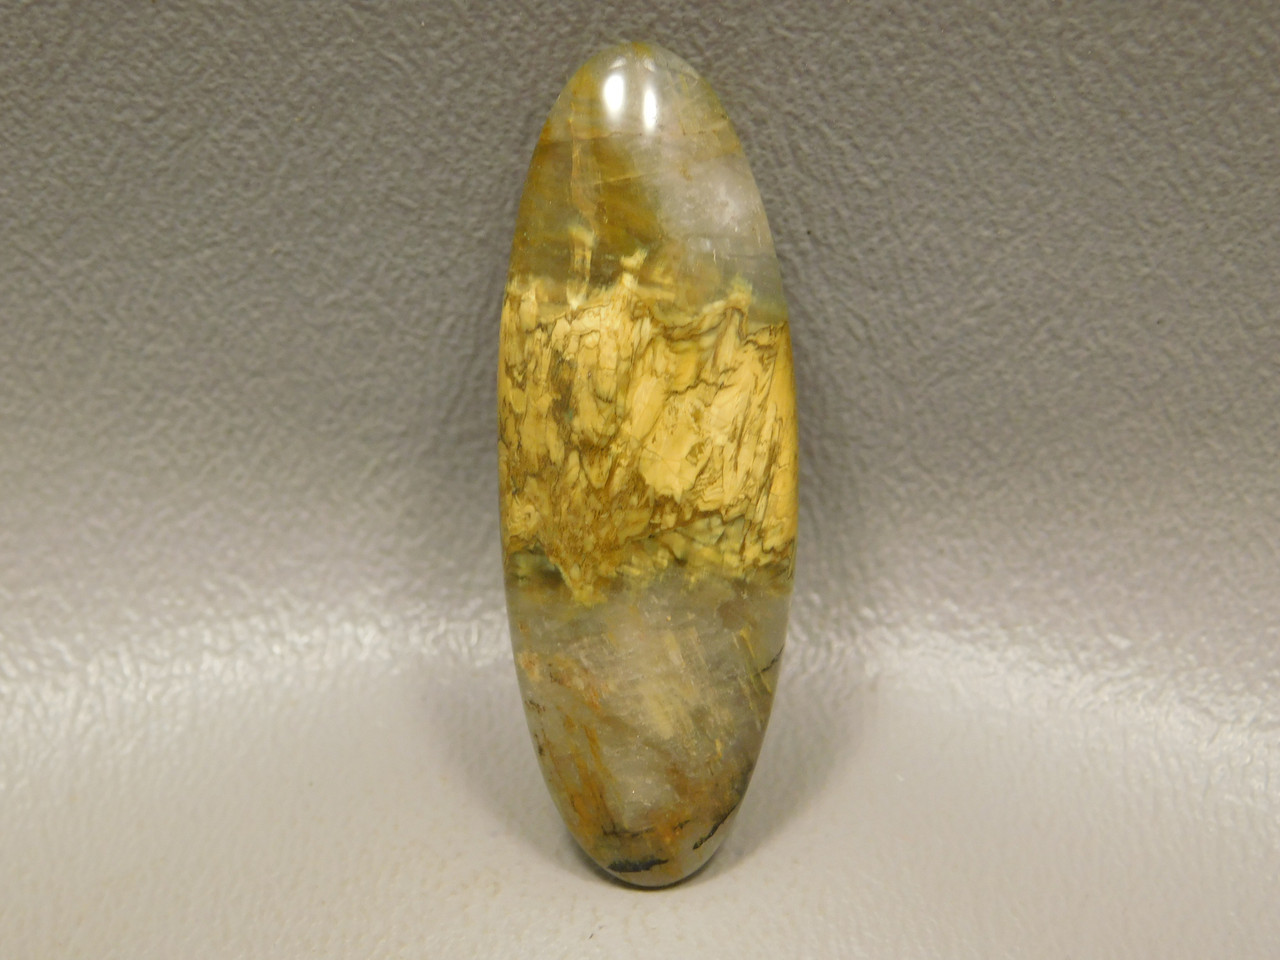 Golden Lionskin Quartz Designer Cabochon Jewelry Stone #10